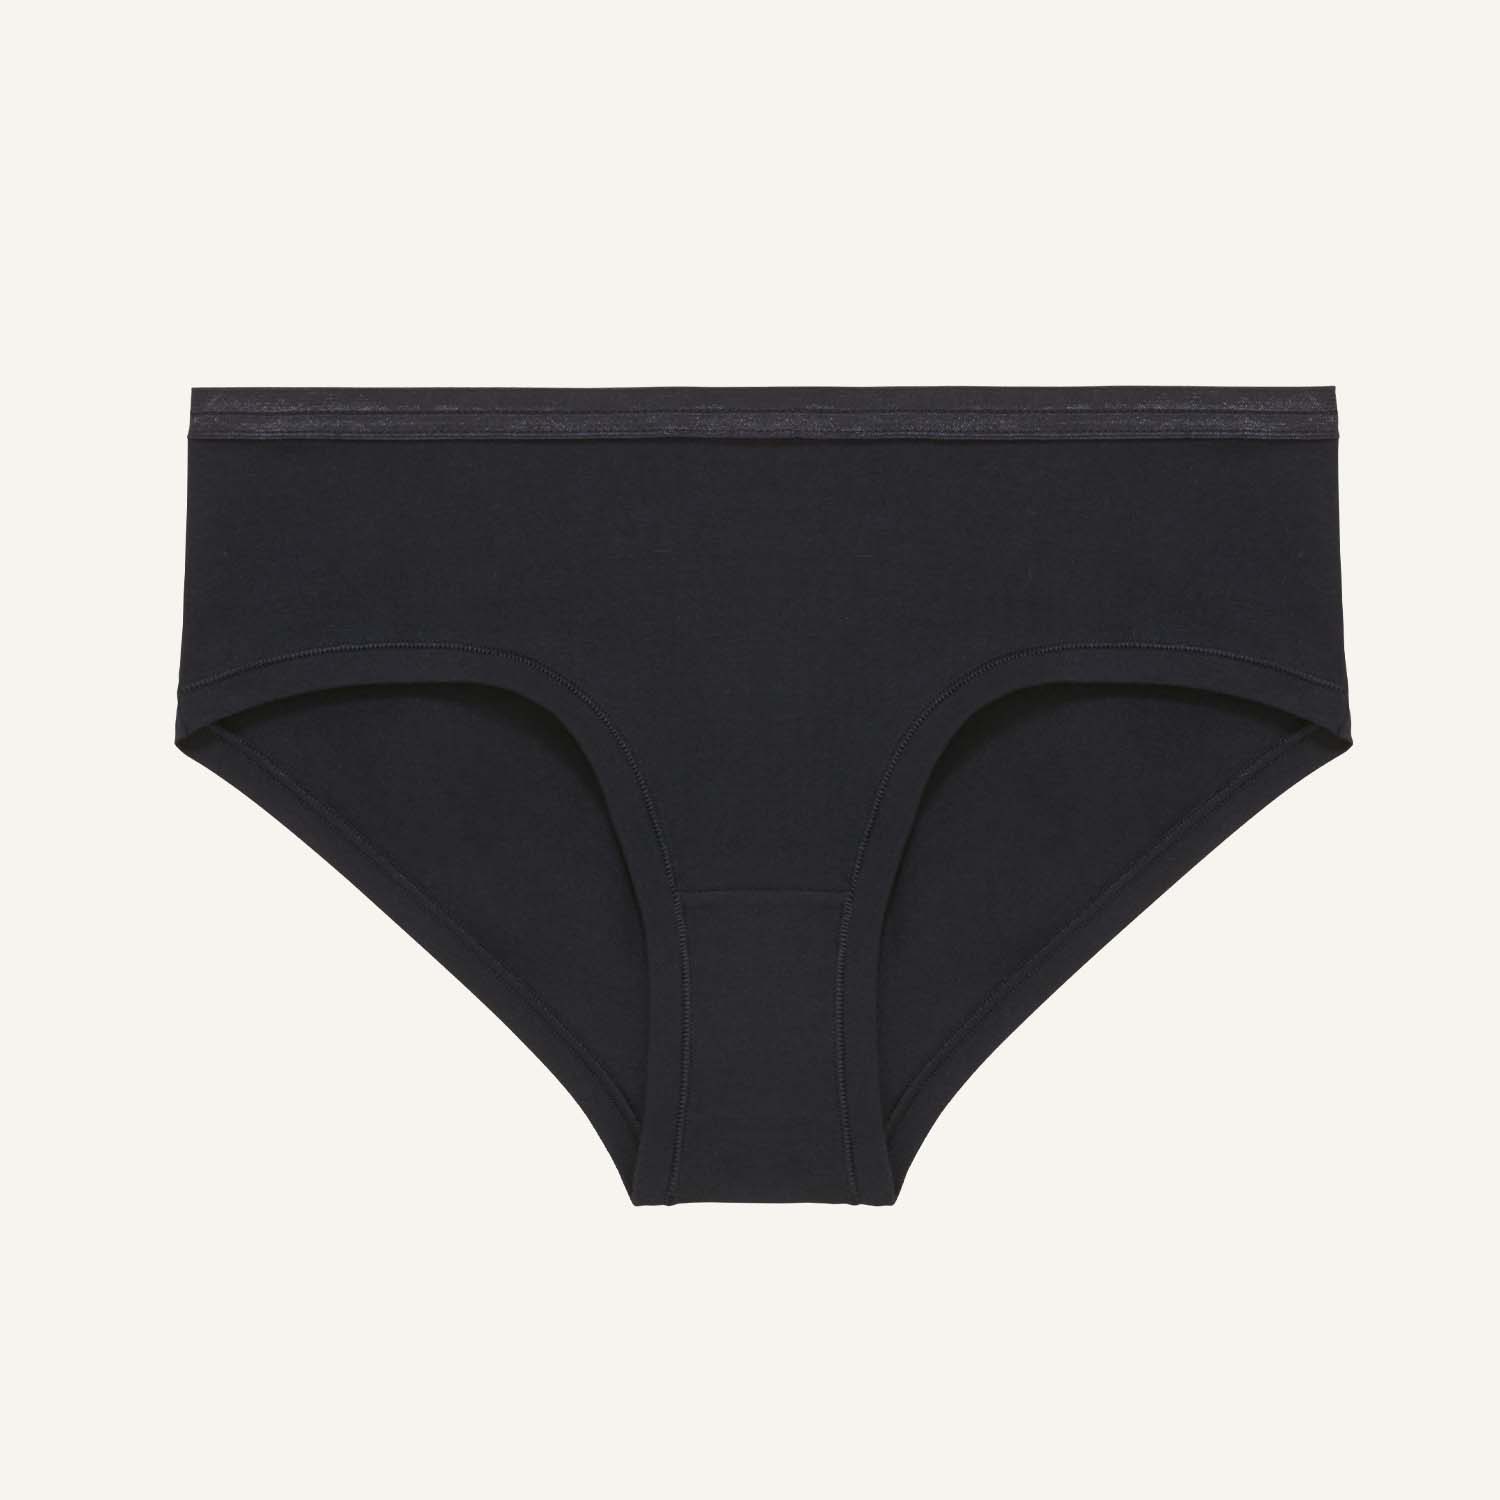 Wardrobe Revamp, Part 3: Knickey Underwear Review - Just to